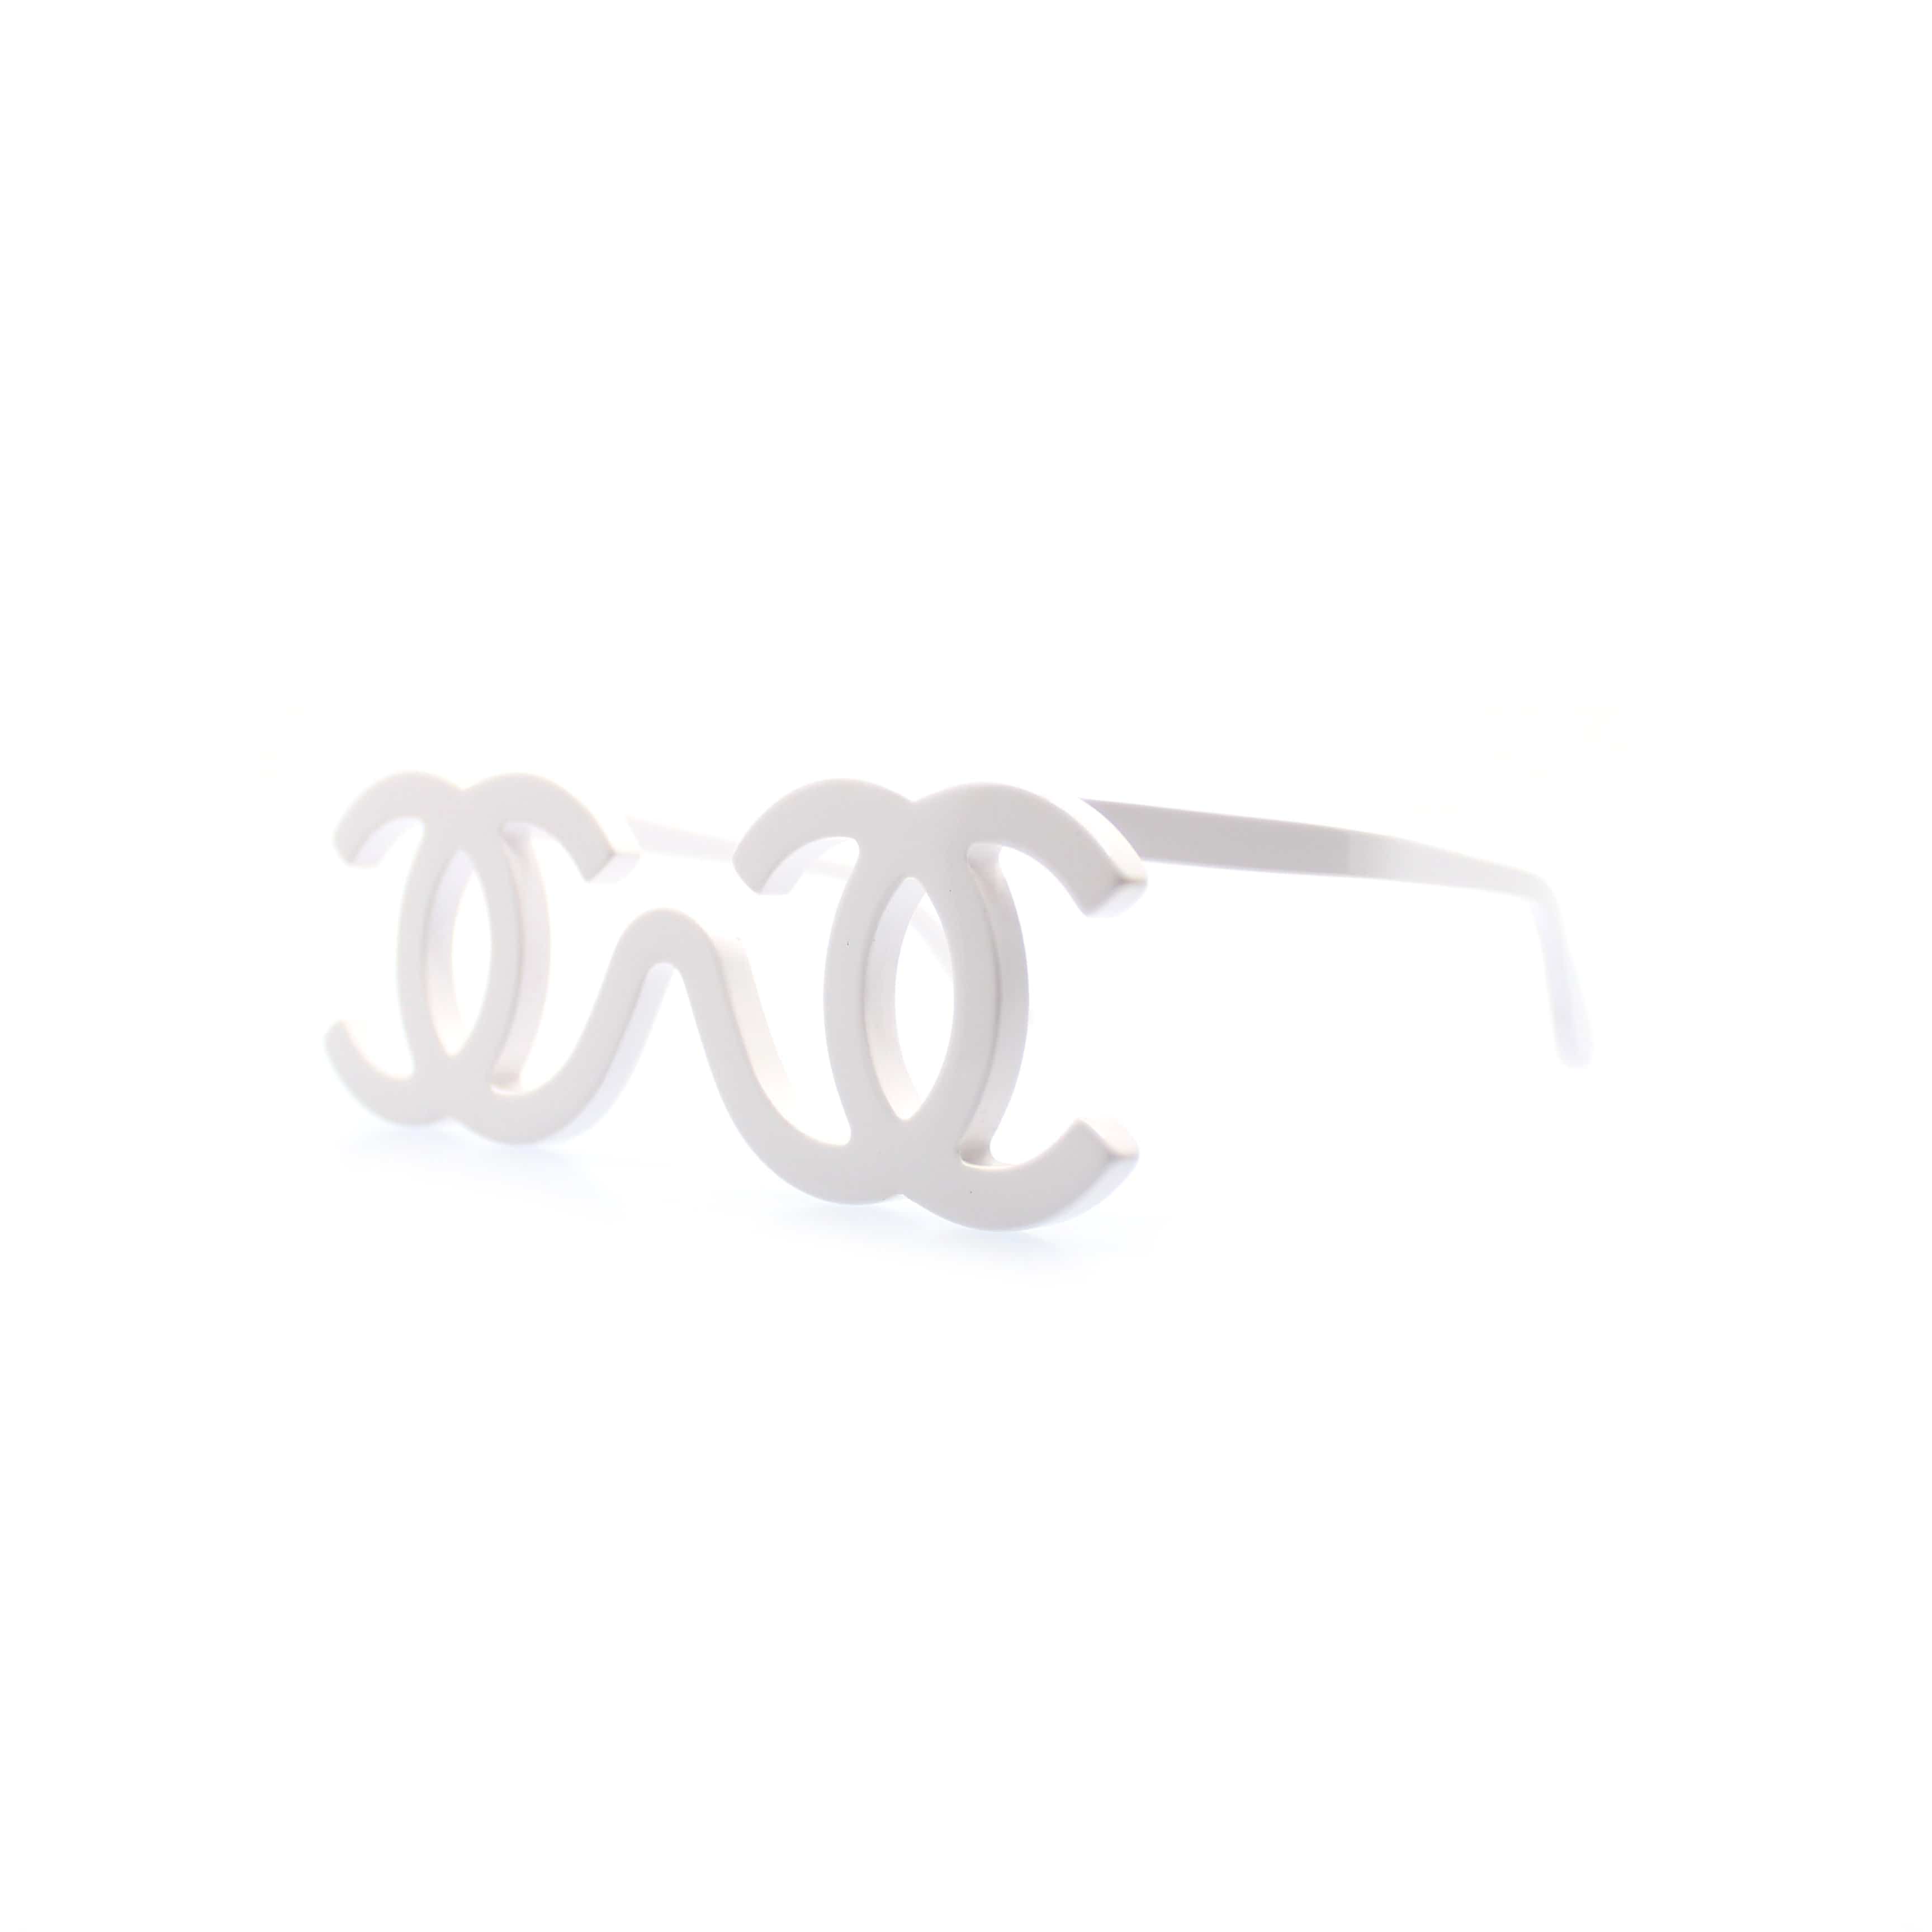 Vintage Chanel Monogrammed Runway Sample Sunglasses